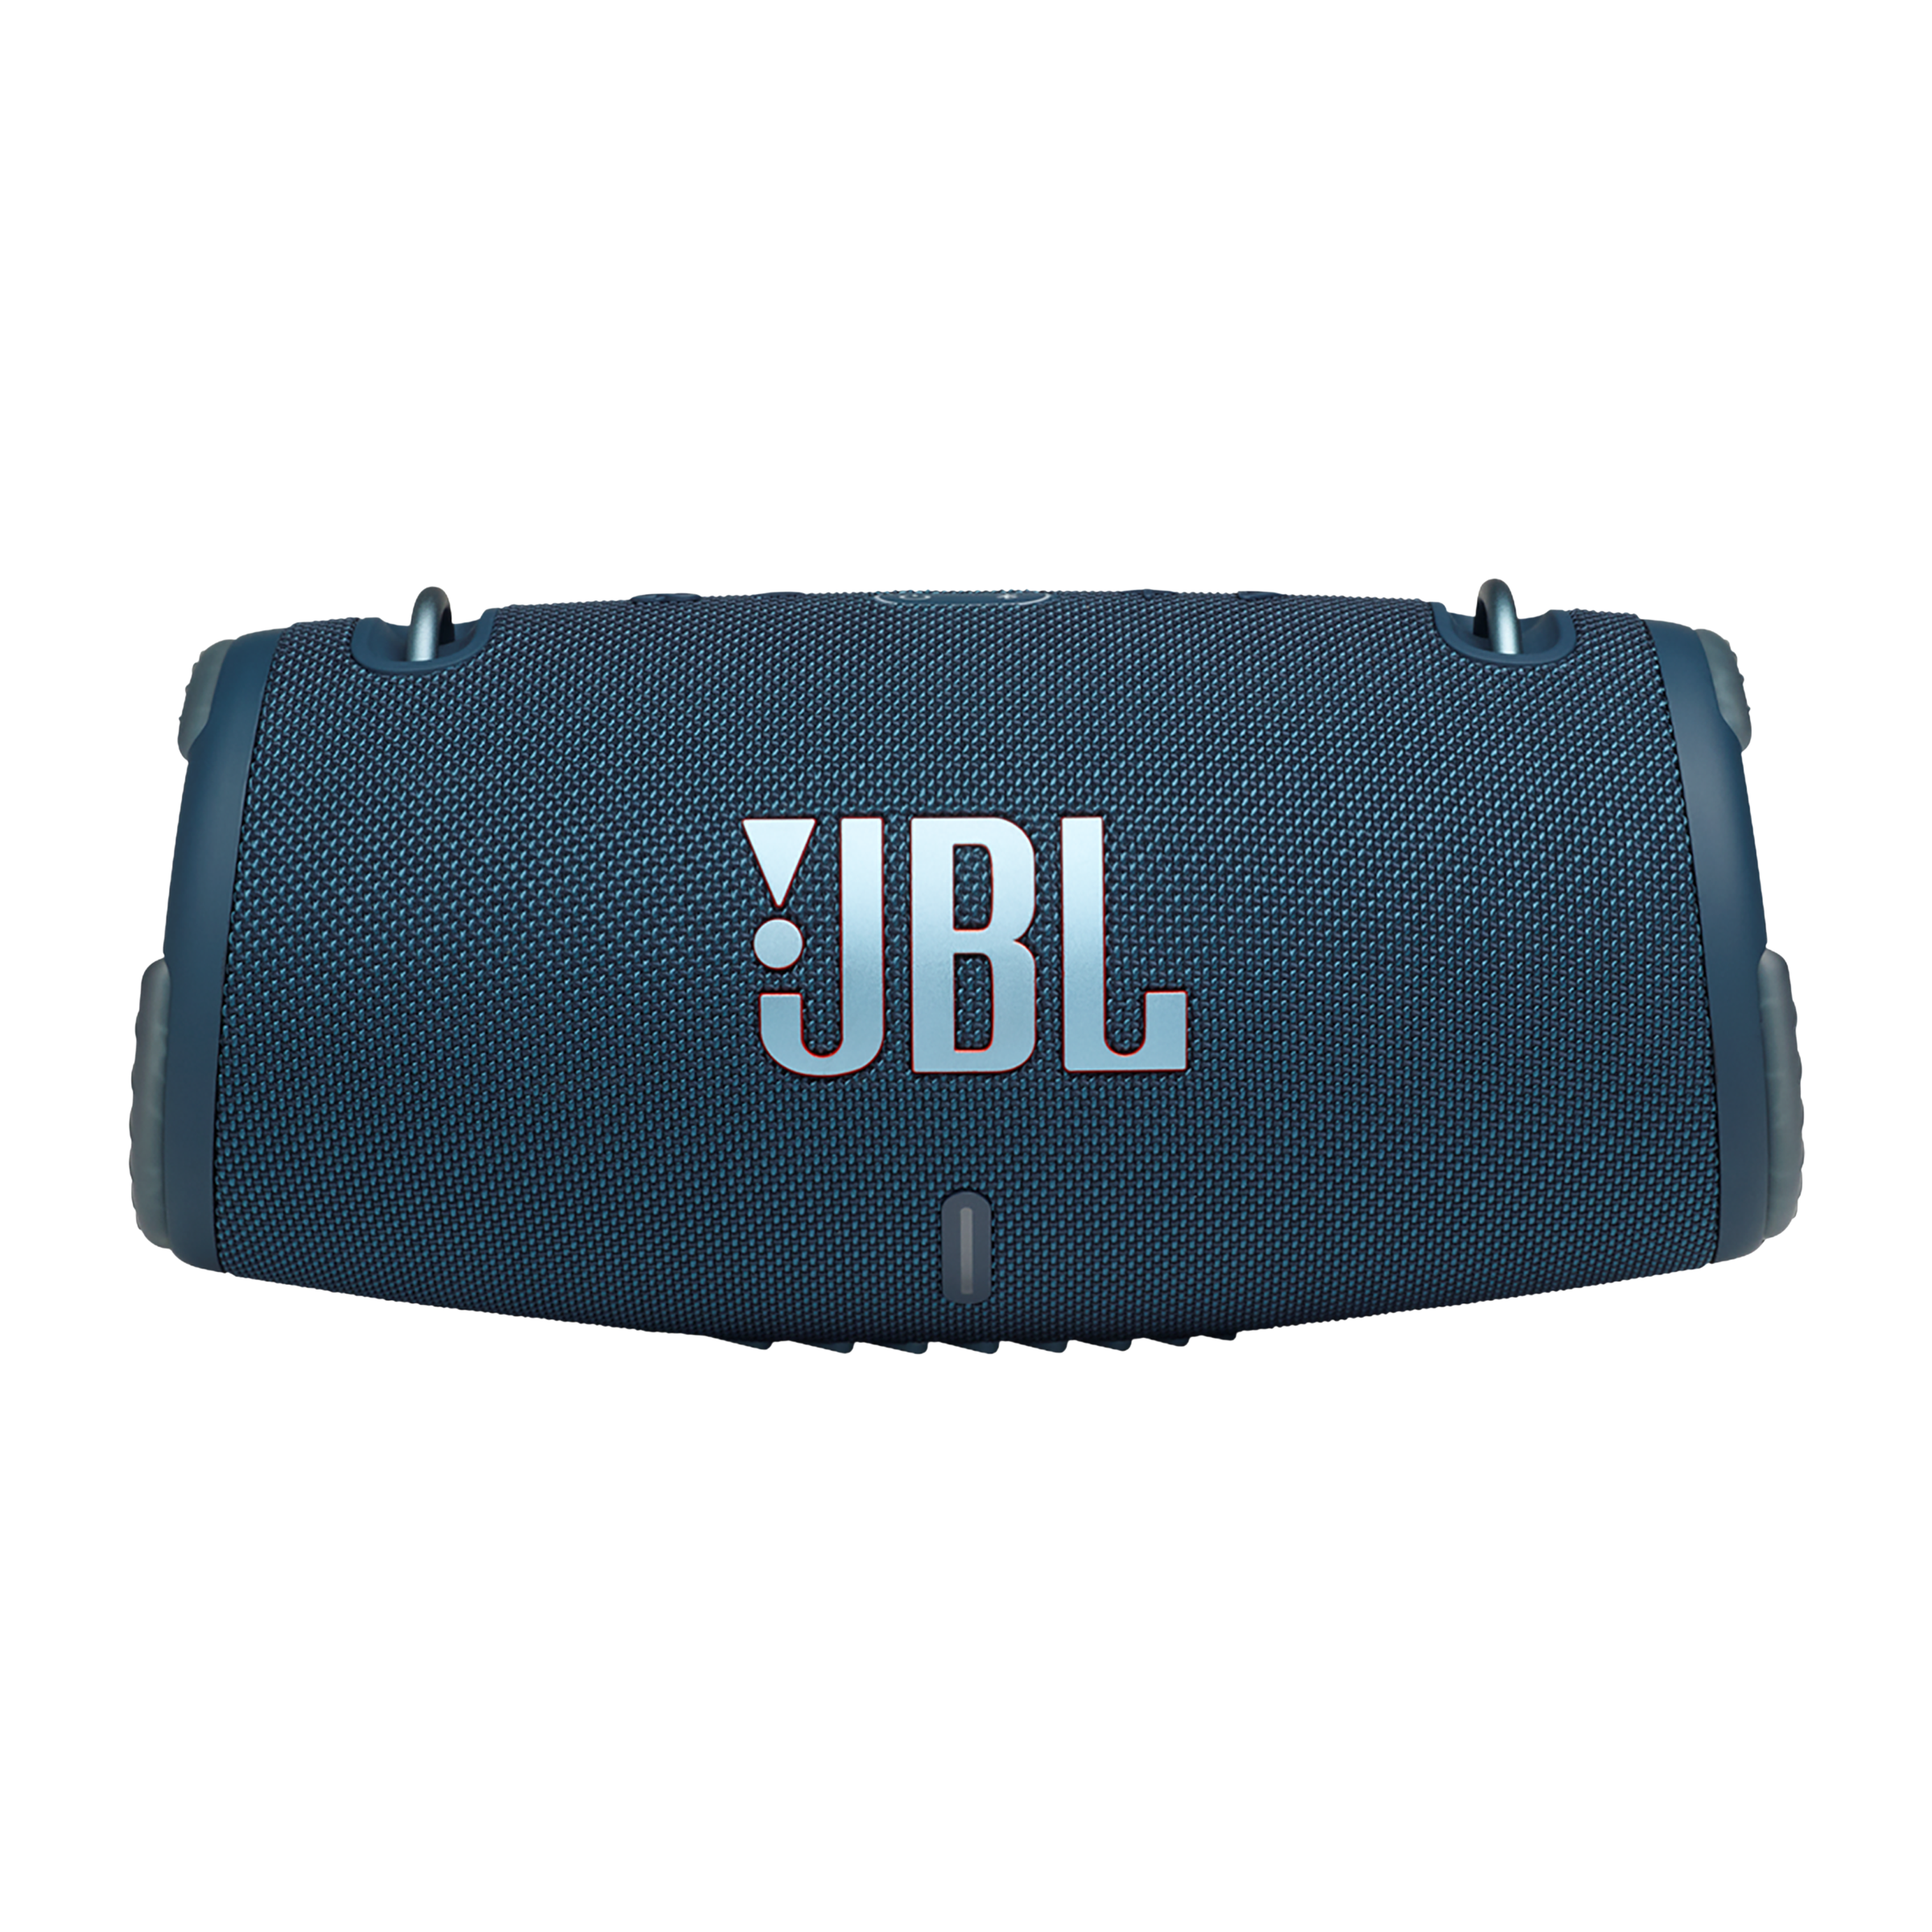 Buy Jbl Xtreme 4 Original devices online